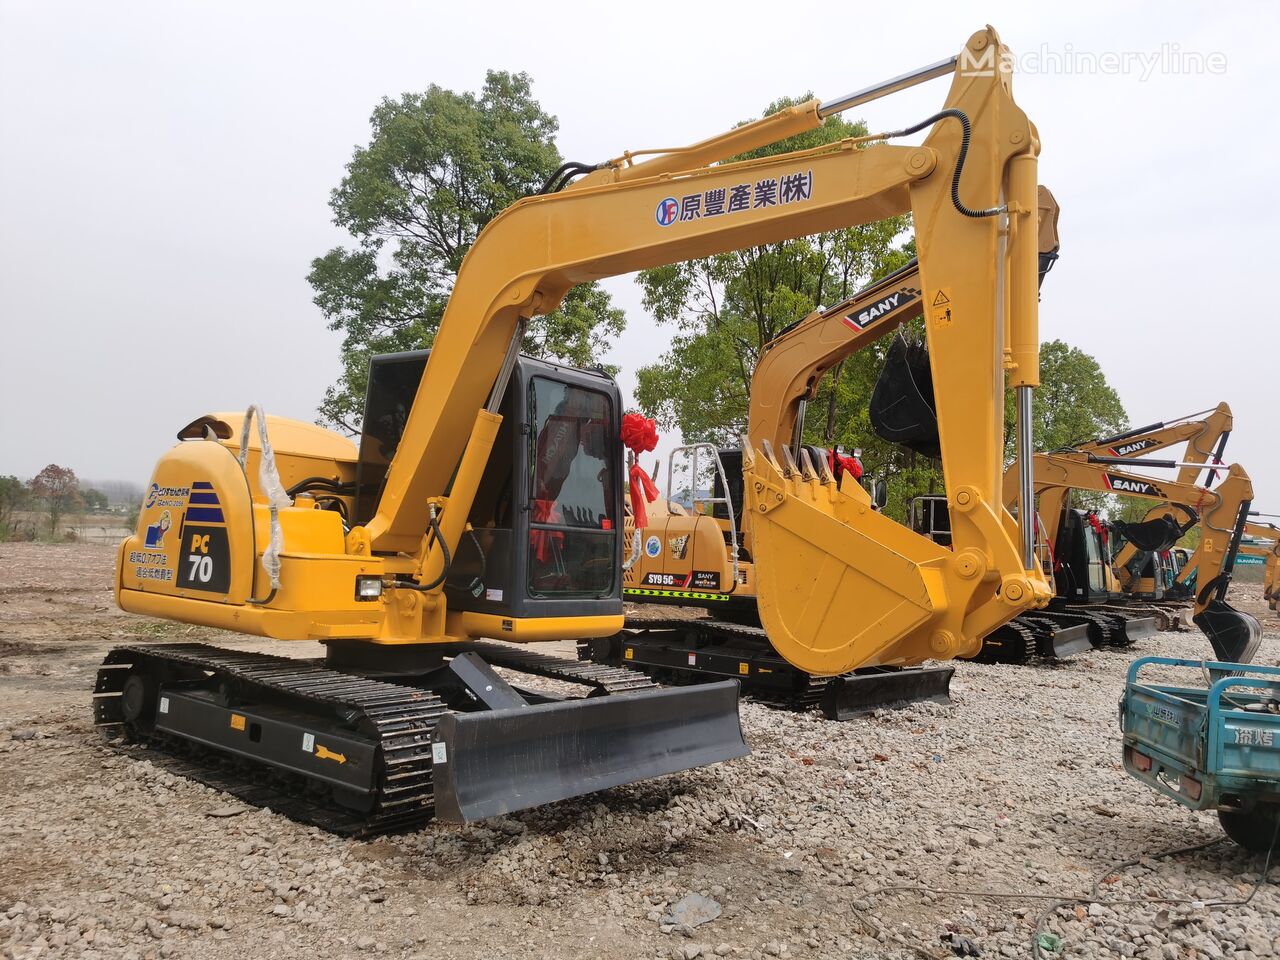 Komatsu PC70-8 tracked excavator